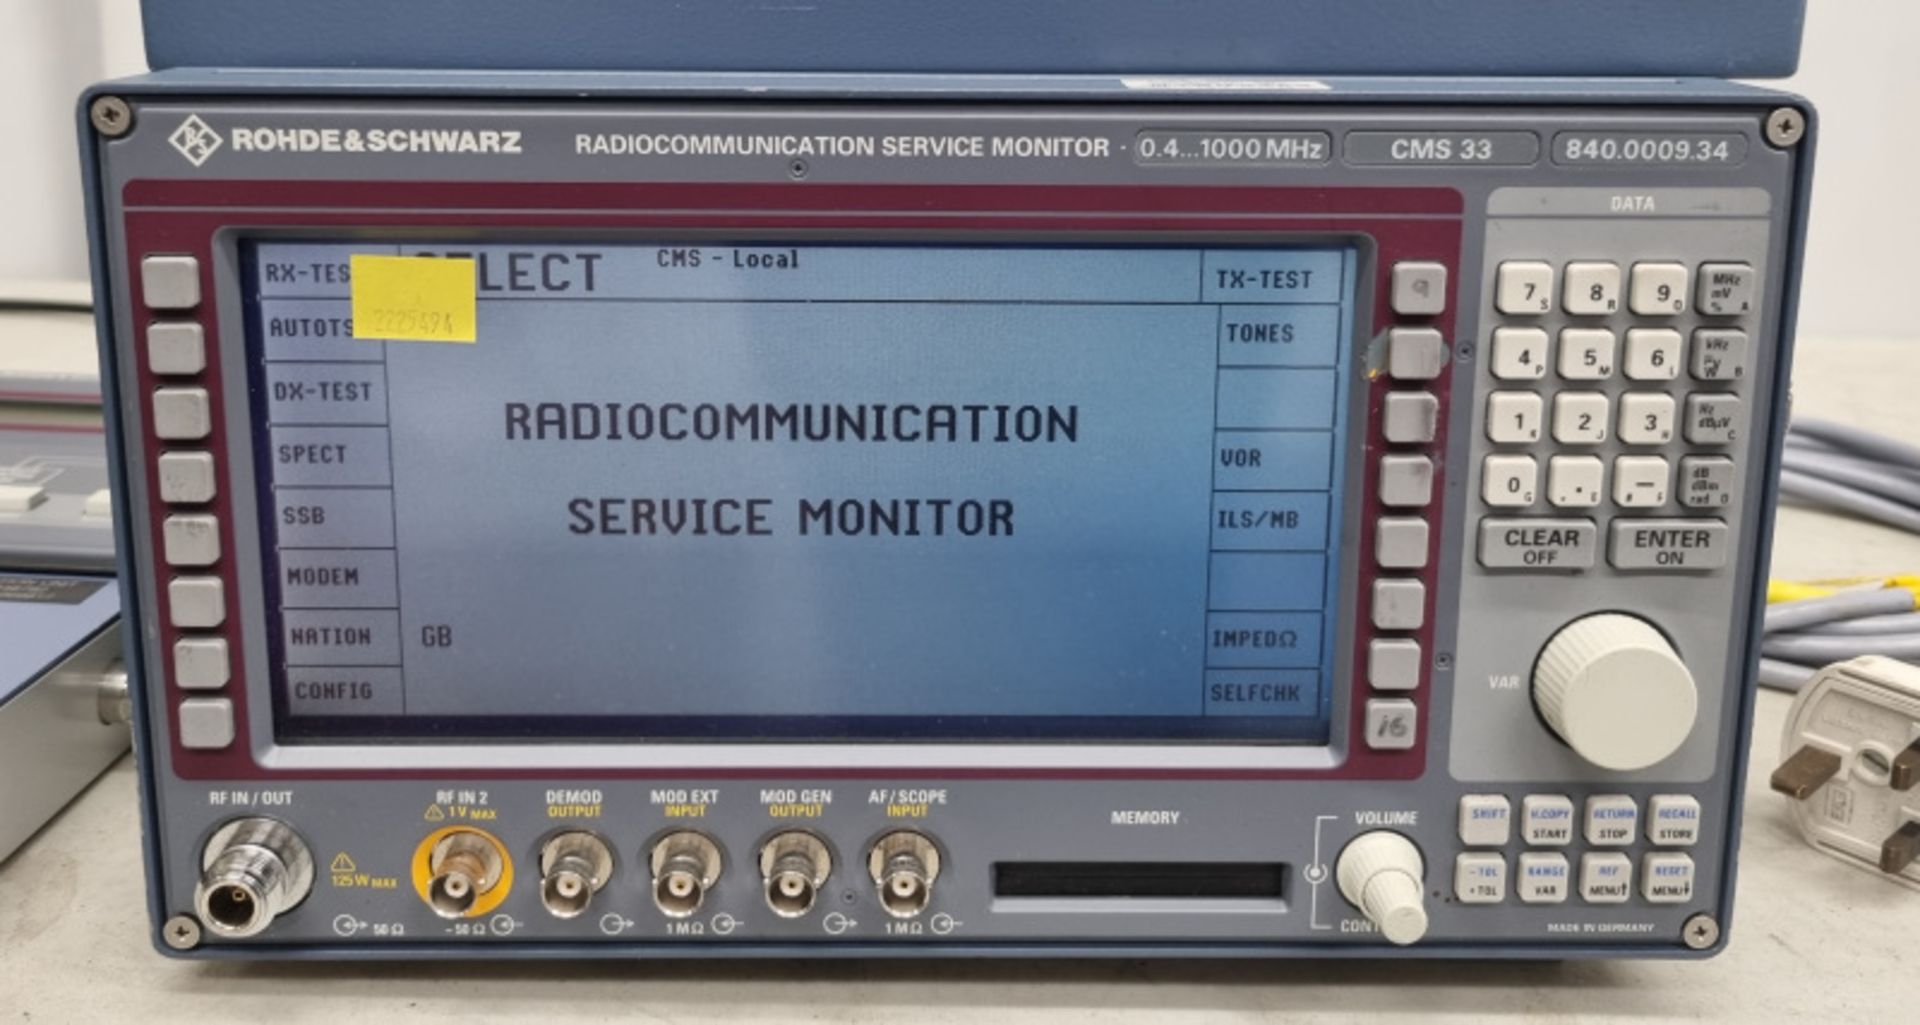 Rohde & Schwarz CMS33 Radiocommunication Service Monitor 0.4 - 1000mhz - 840.0009.34 - Image 4 of 10